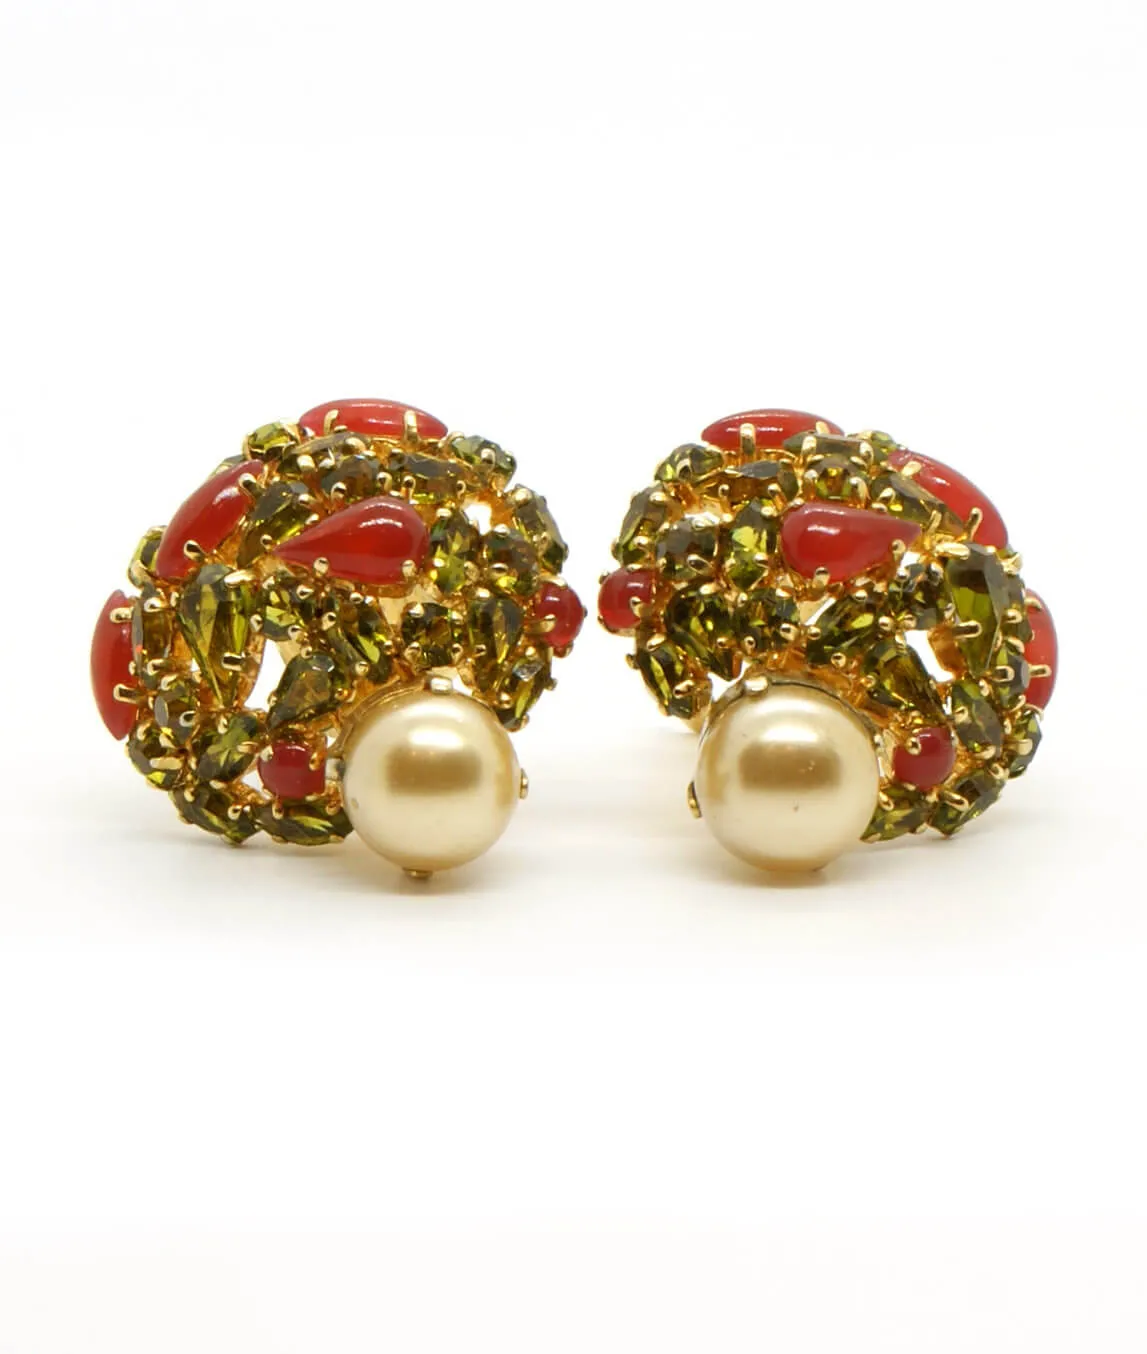 Christian Dior vintage earrings